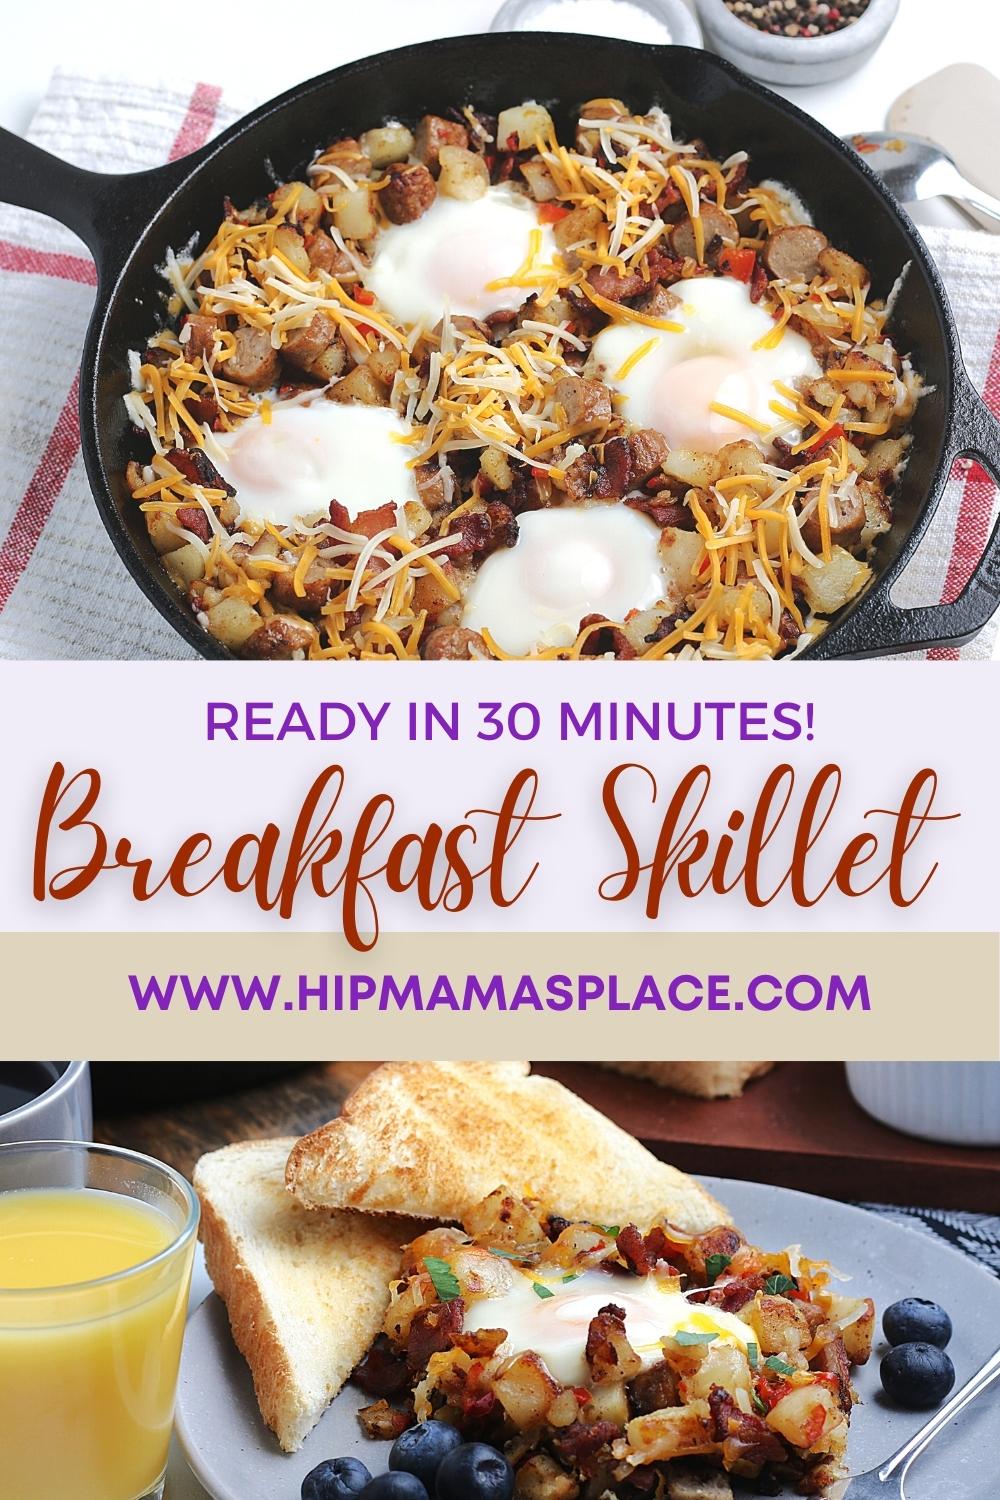 Breakfast Skillet Recipe {Cooks in 20 Minutes!}